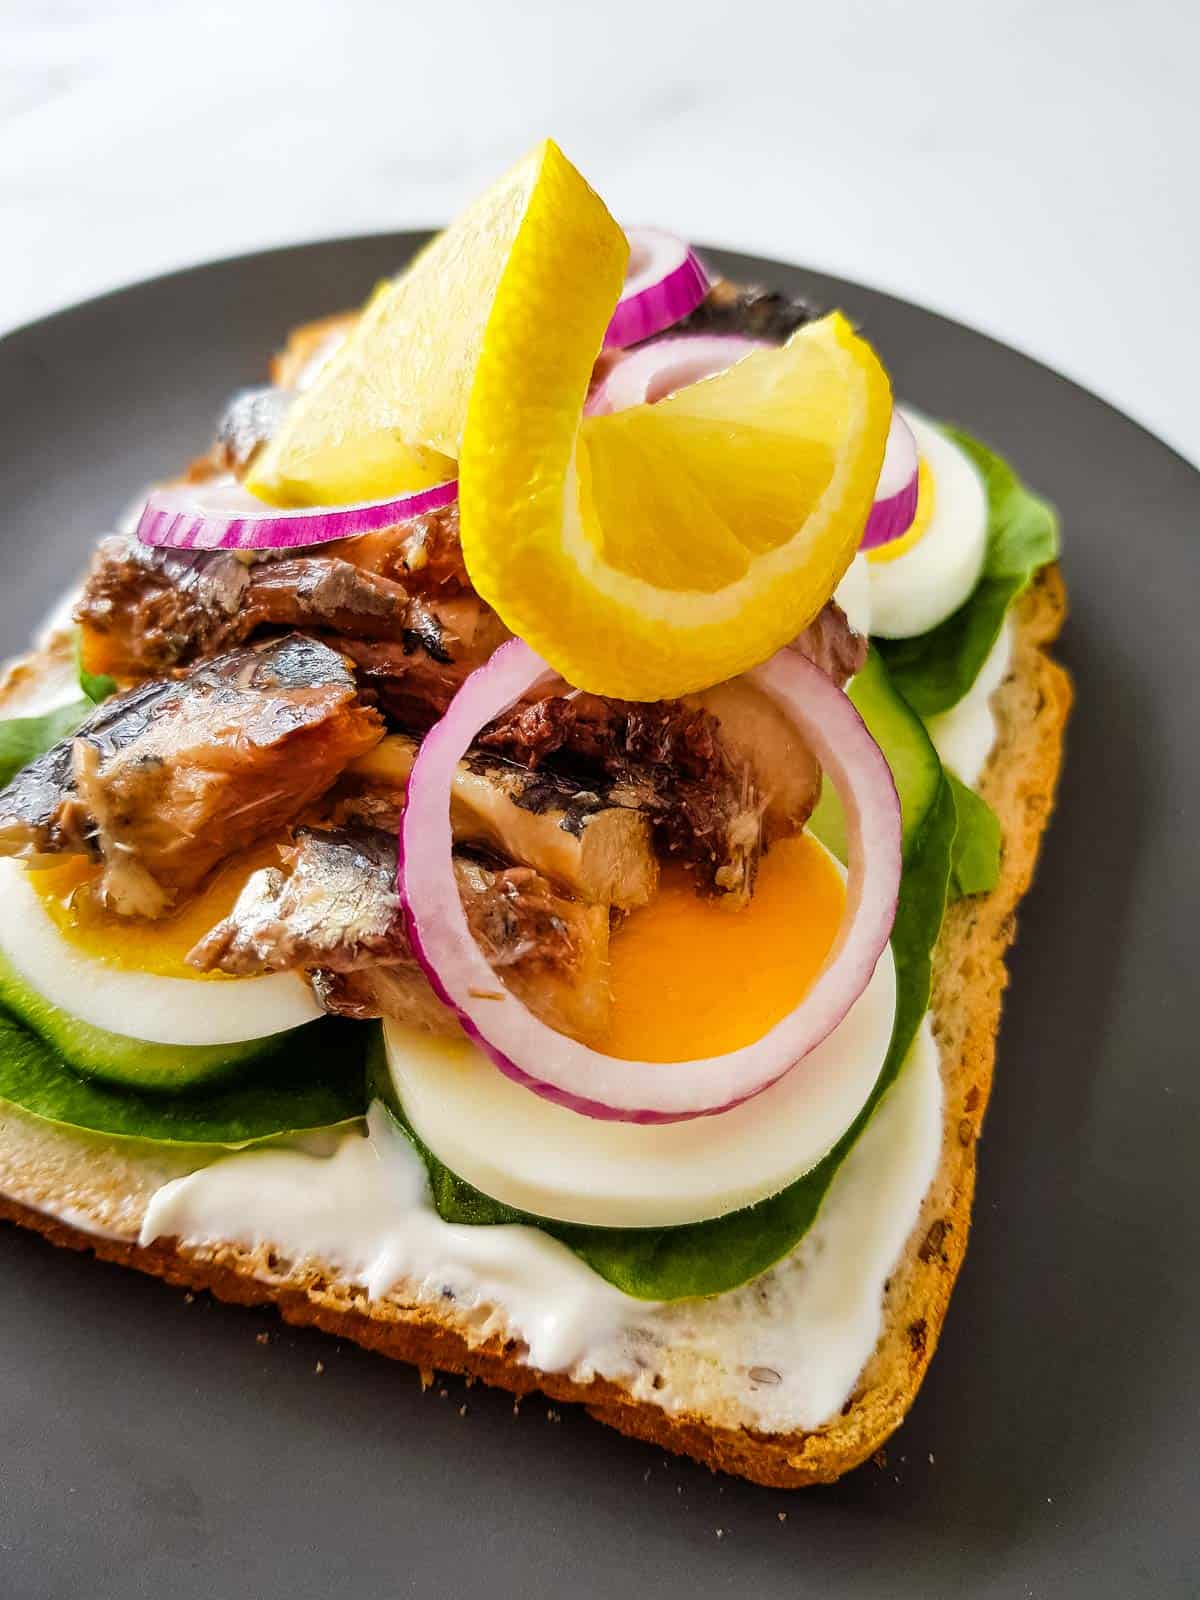 Sardine sandwich with cucumbers, lemon, eggs and onion.